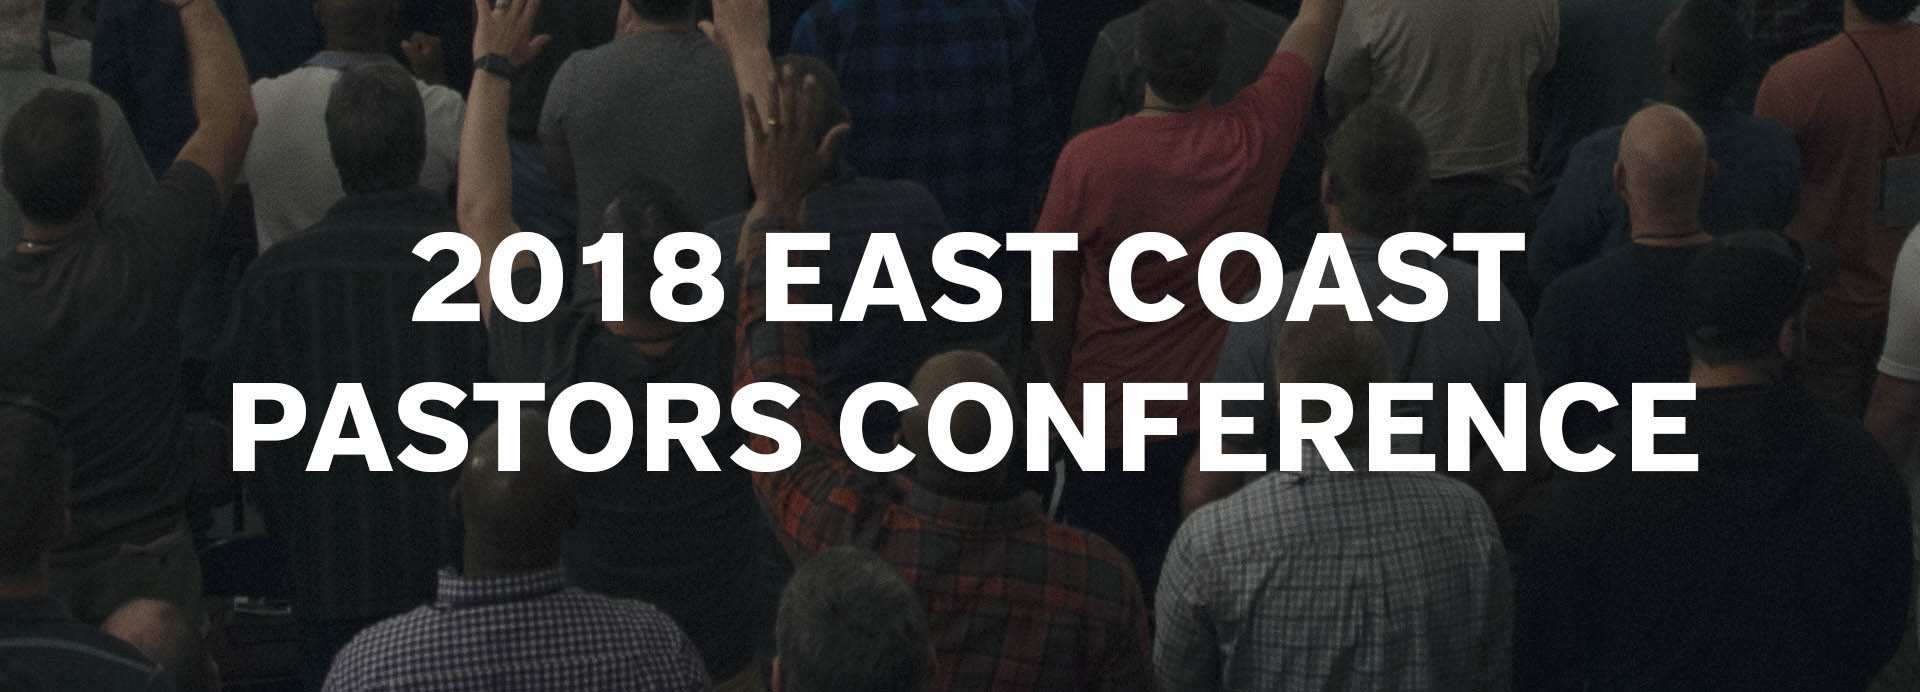 East Coast Pastors Conference 2018